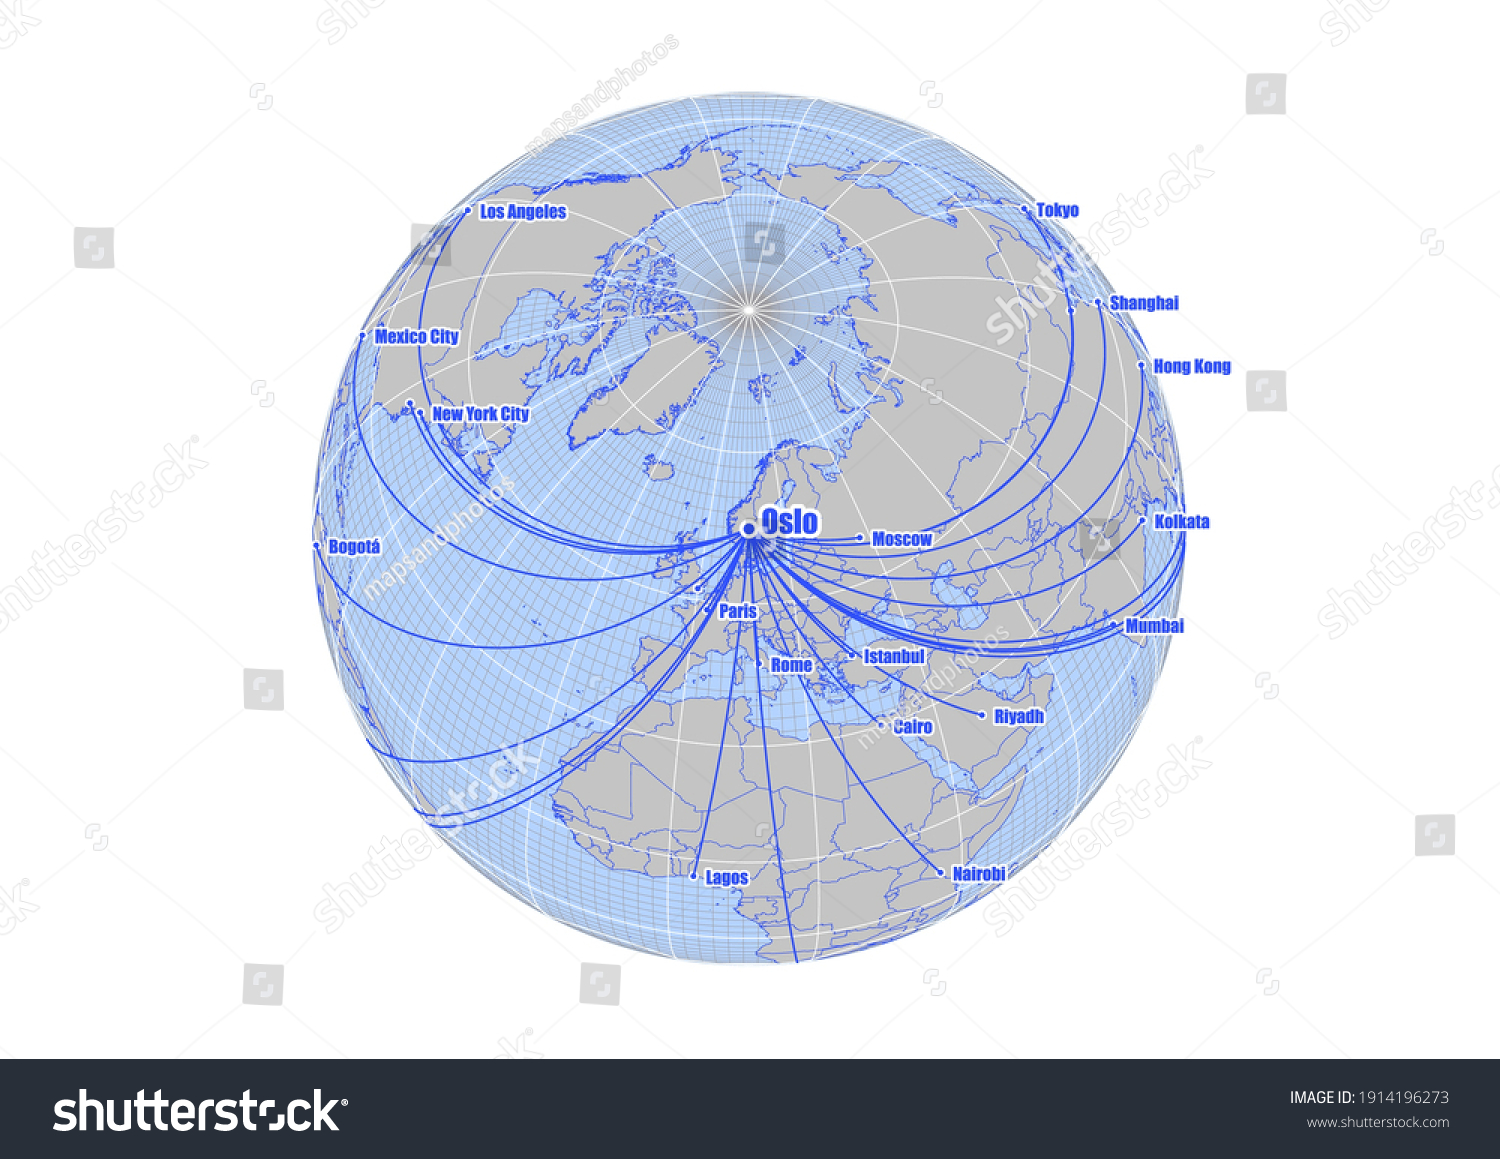 Norway Globe Position Images Stock Photos Vectors Shutterstock